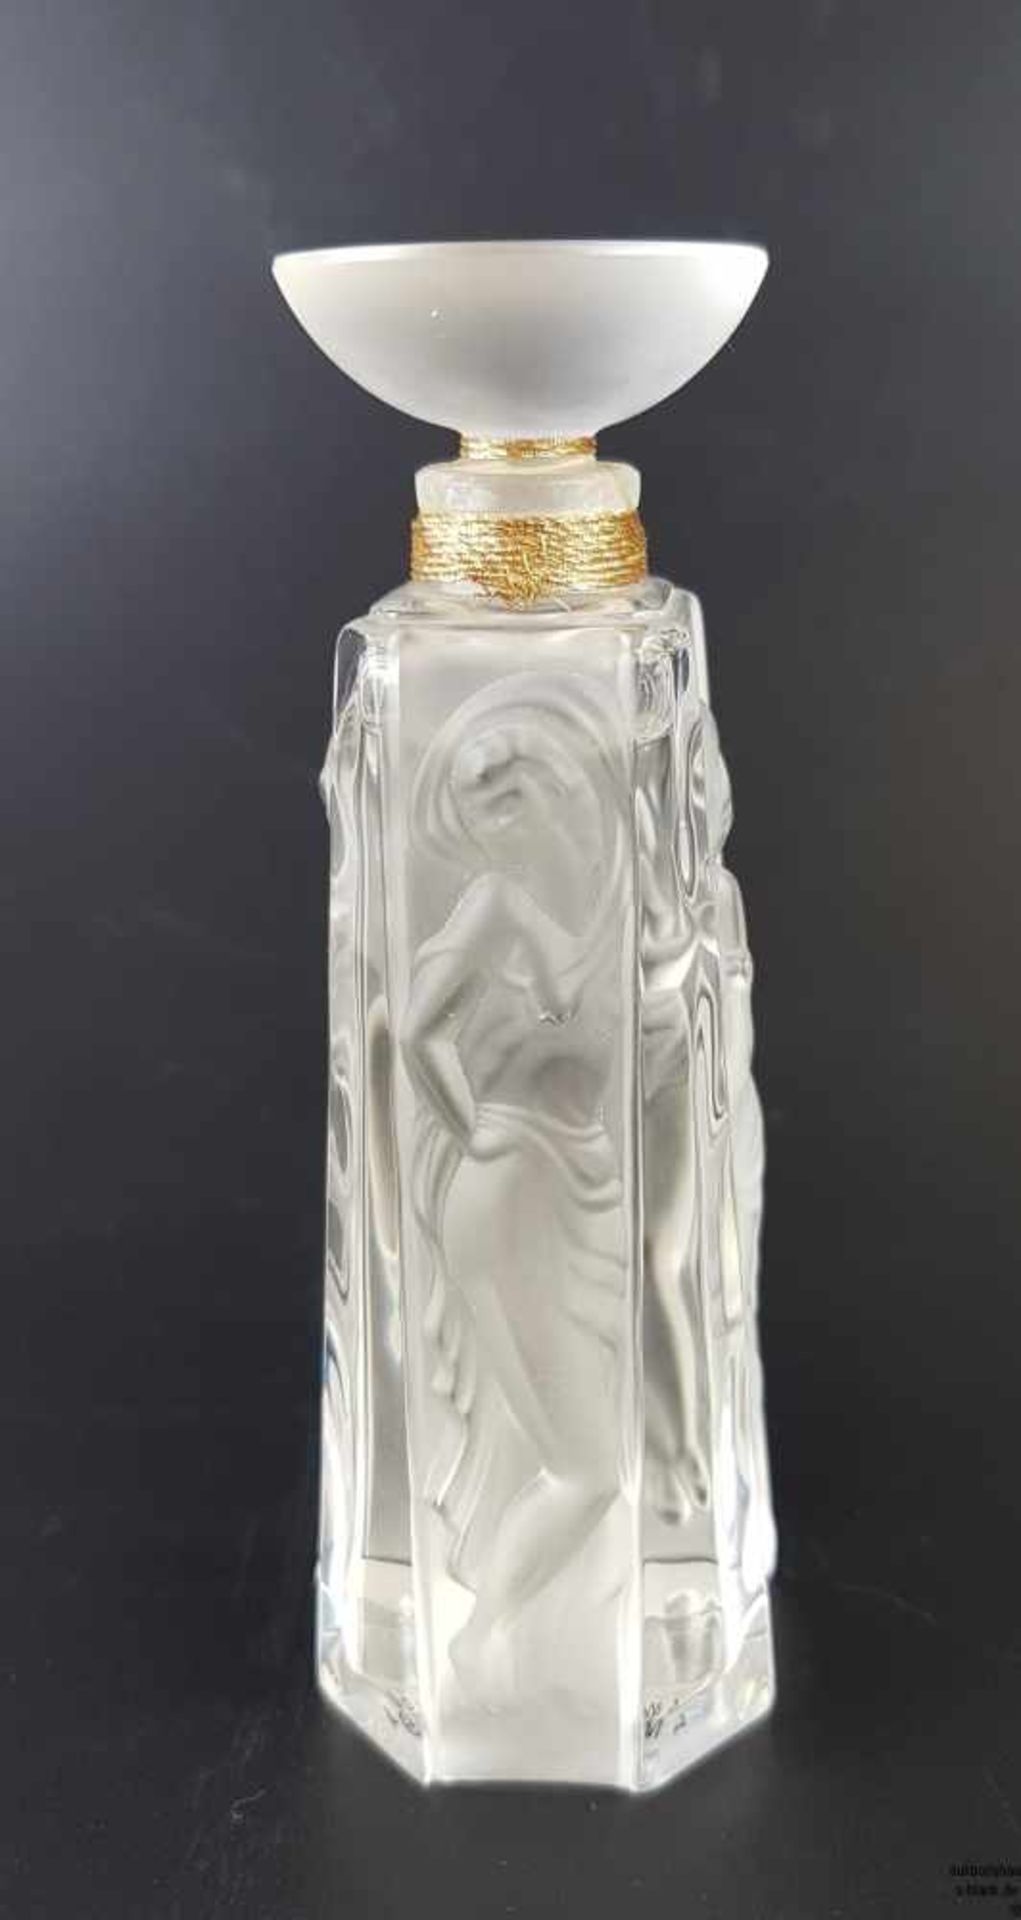 Lalique-Flakon - Factice-Kristallglasflakon, 'Les Muses' Edition Limitée 1994, farbloses Glas, z.